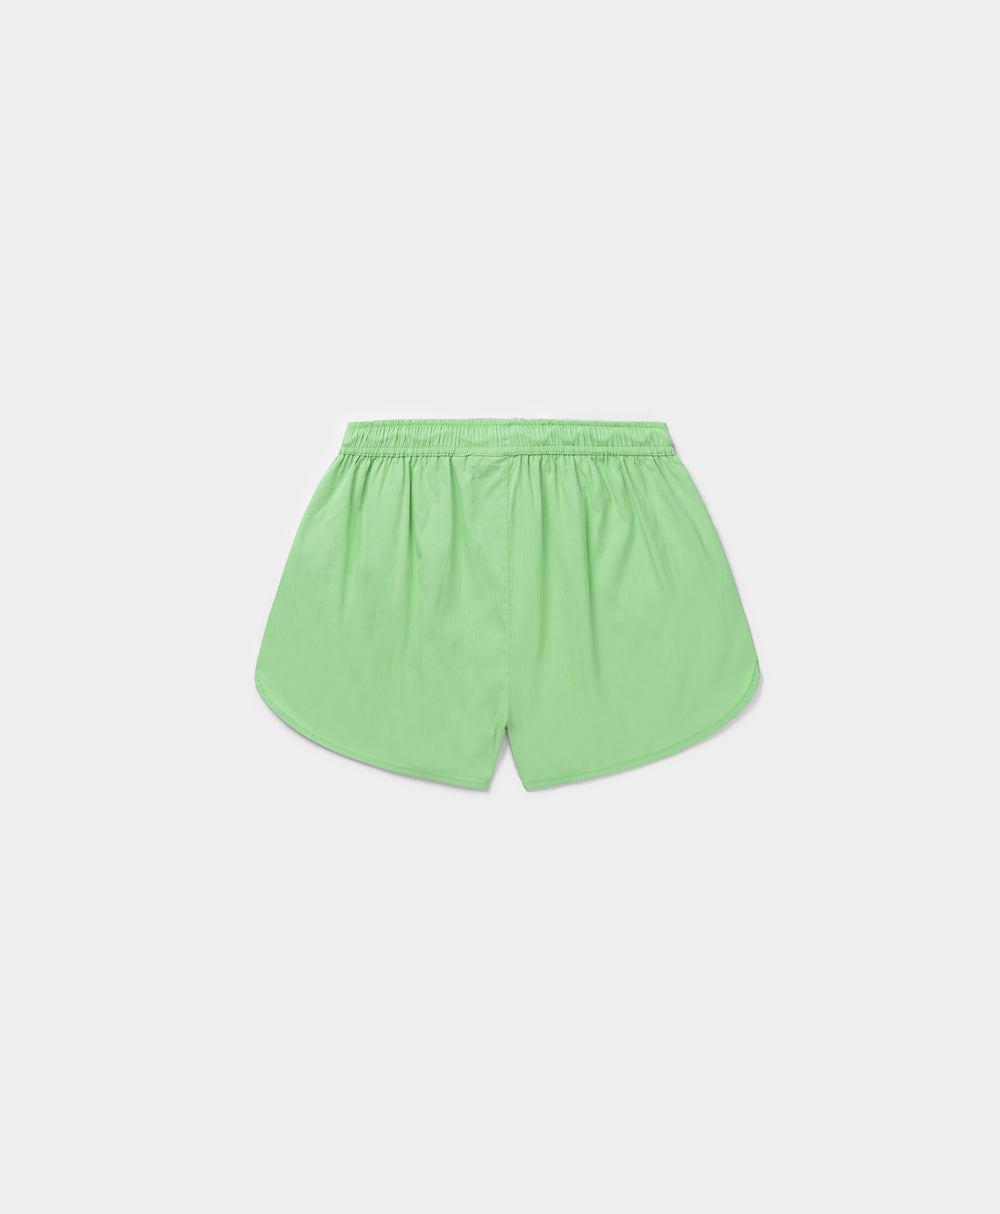 DP - Absinth Green Portia Shorts - Packshot - Rear